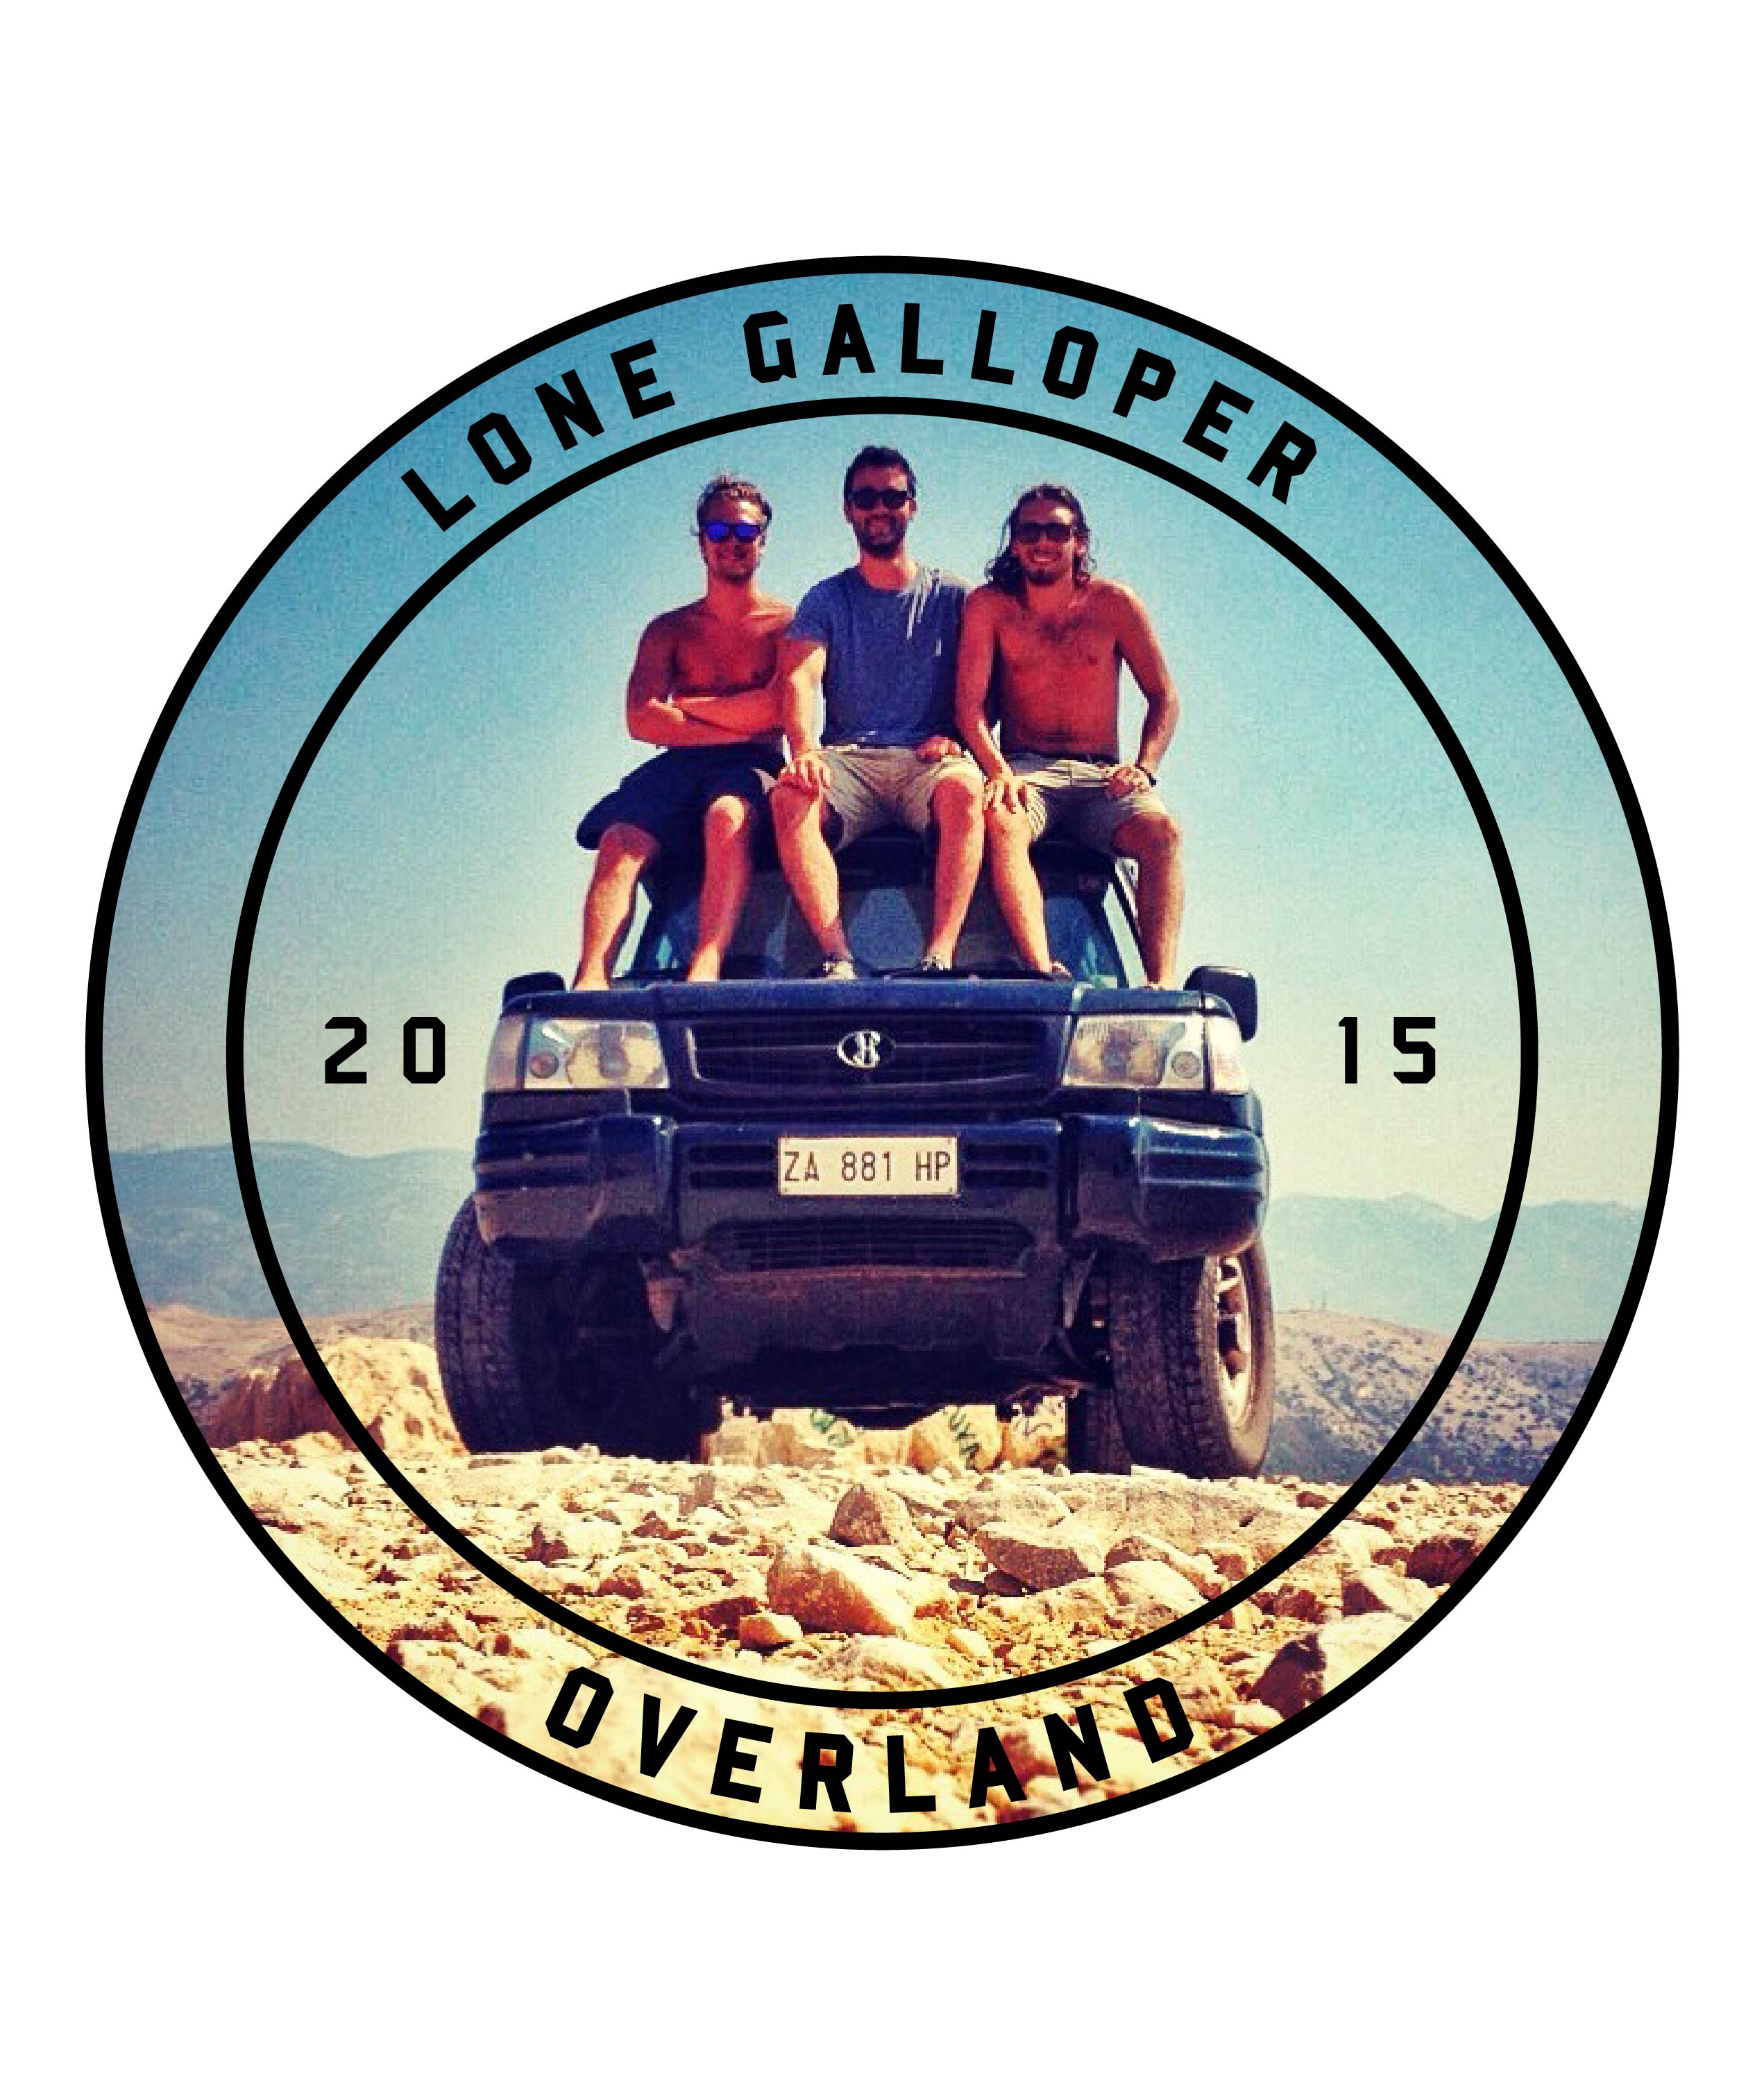 Lone Galloper Overland logo